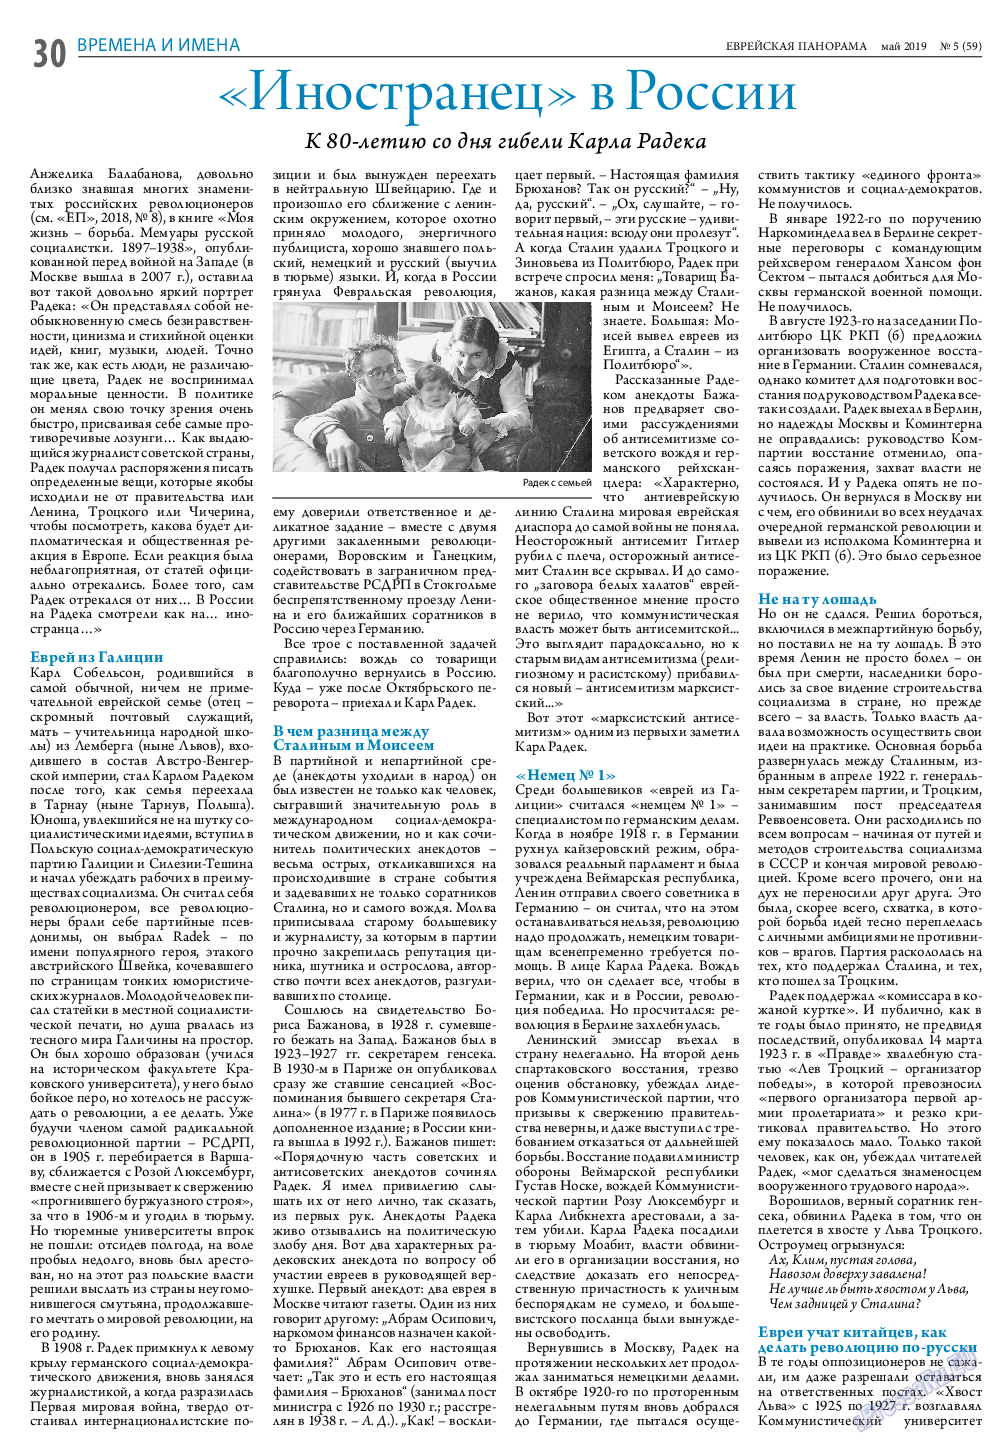 Еврейская панорама, газета. 2019 №5 стр.30